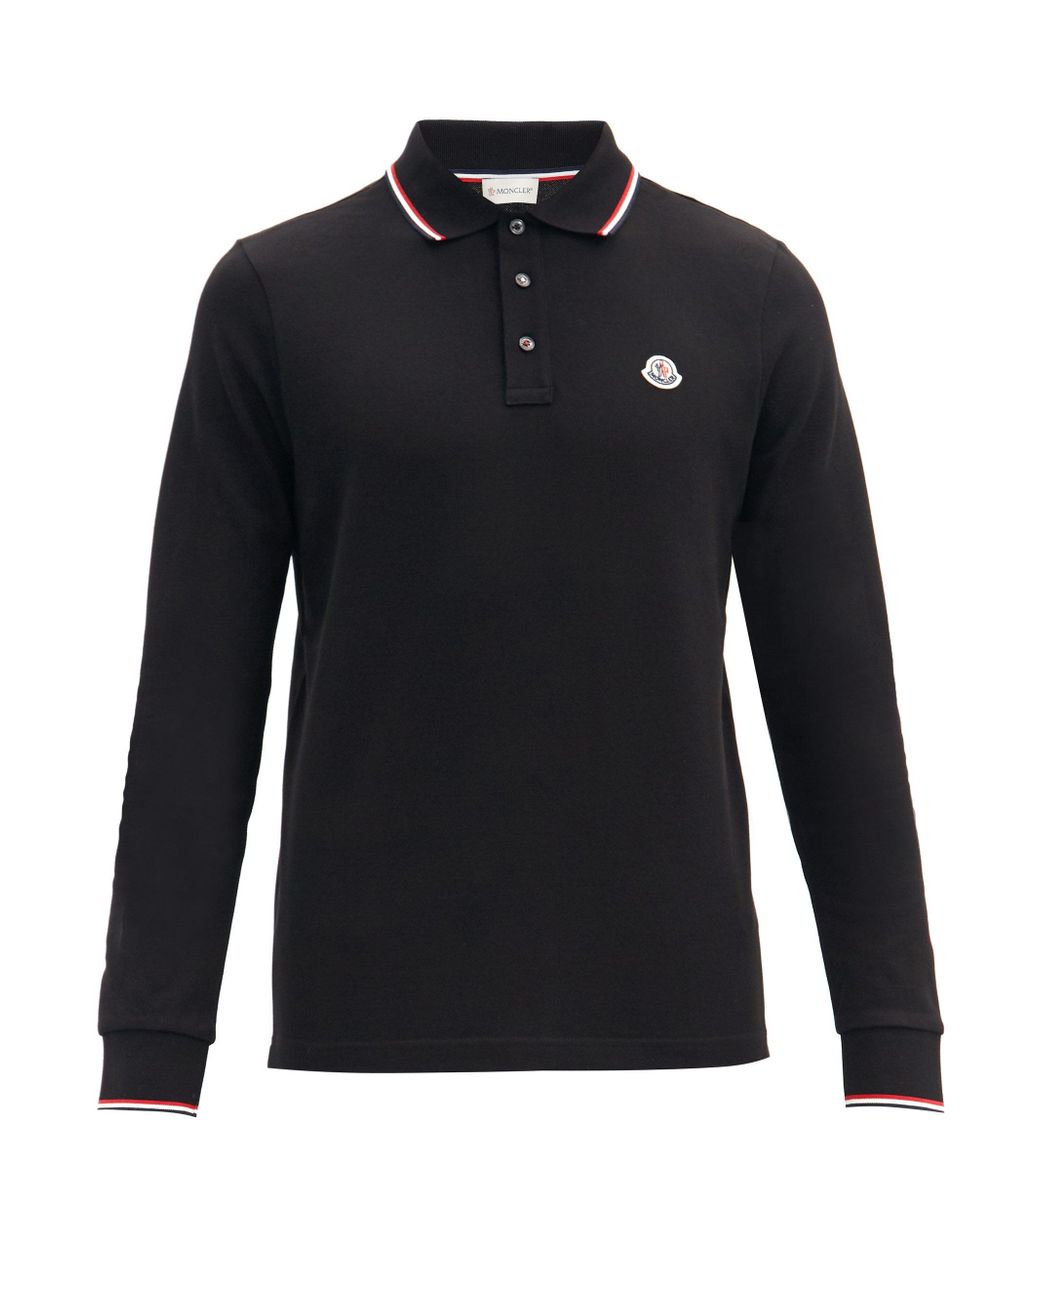 Moncler Logo Cotton-piqué Long-sleeved Polo Shirt in Black for Men - Lyst